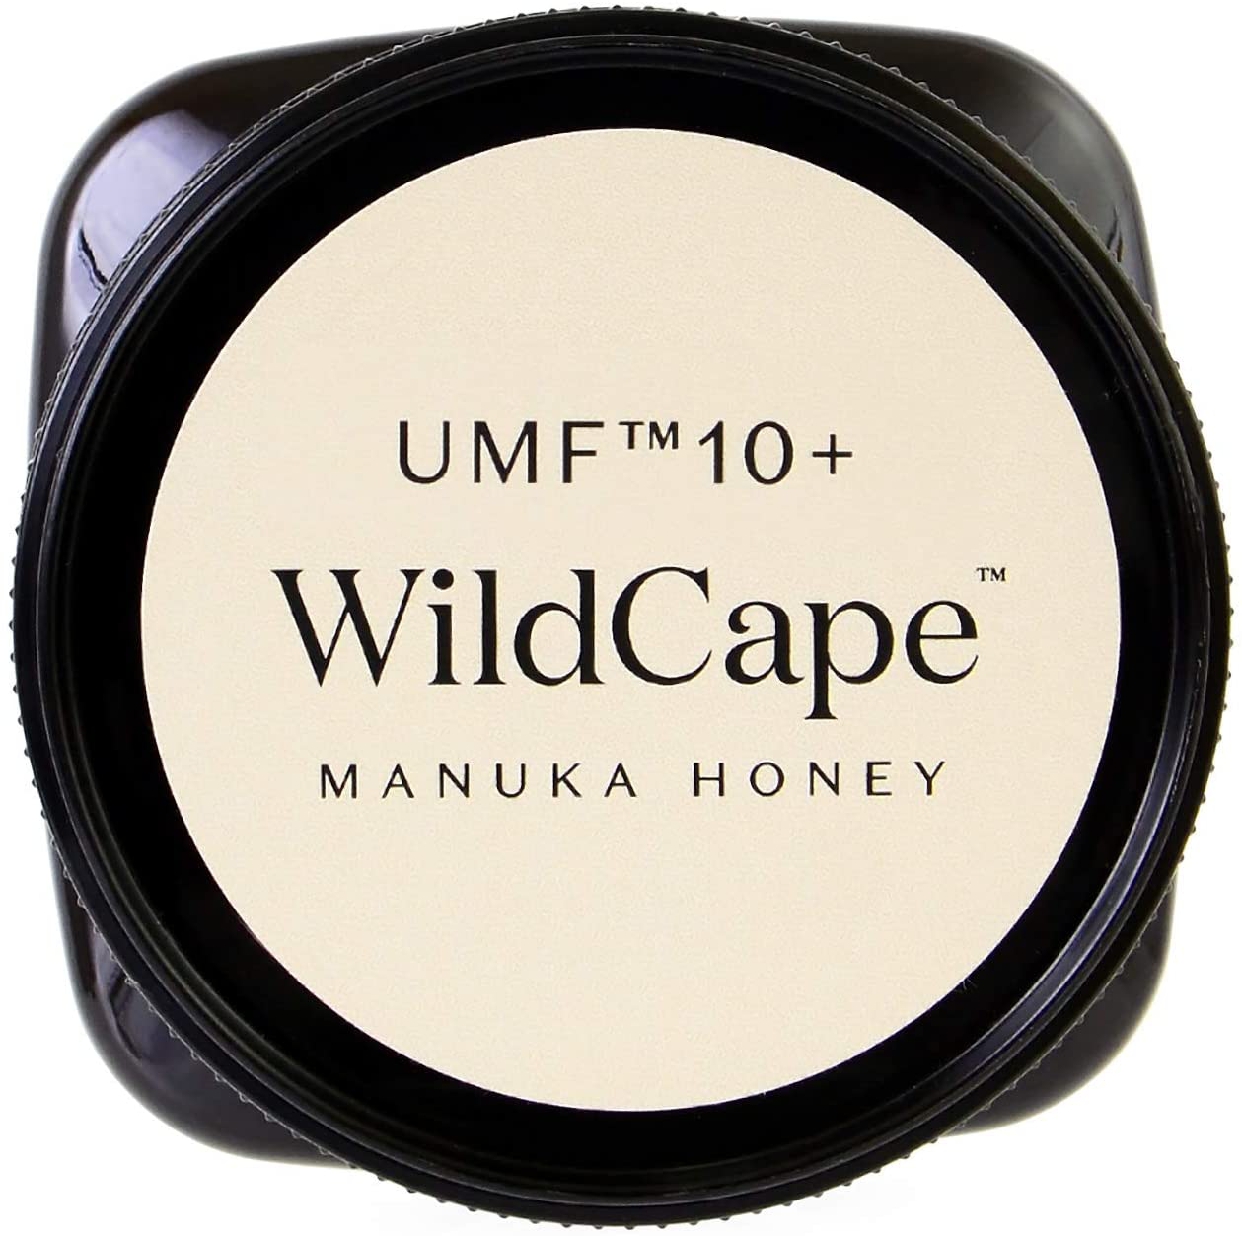 Wild Cape(ワイルドケープ) UMF 10+ Manuka Honeyの商品画像3 